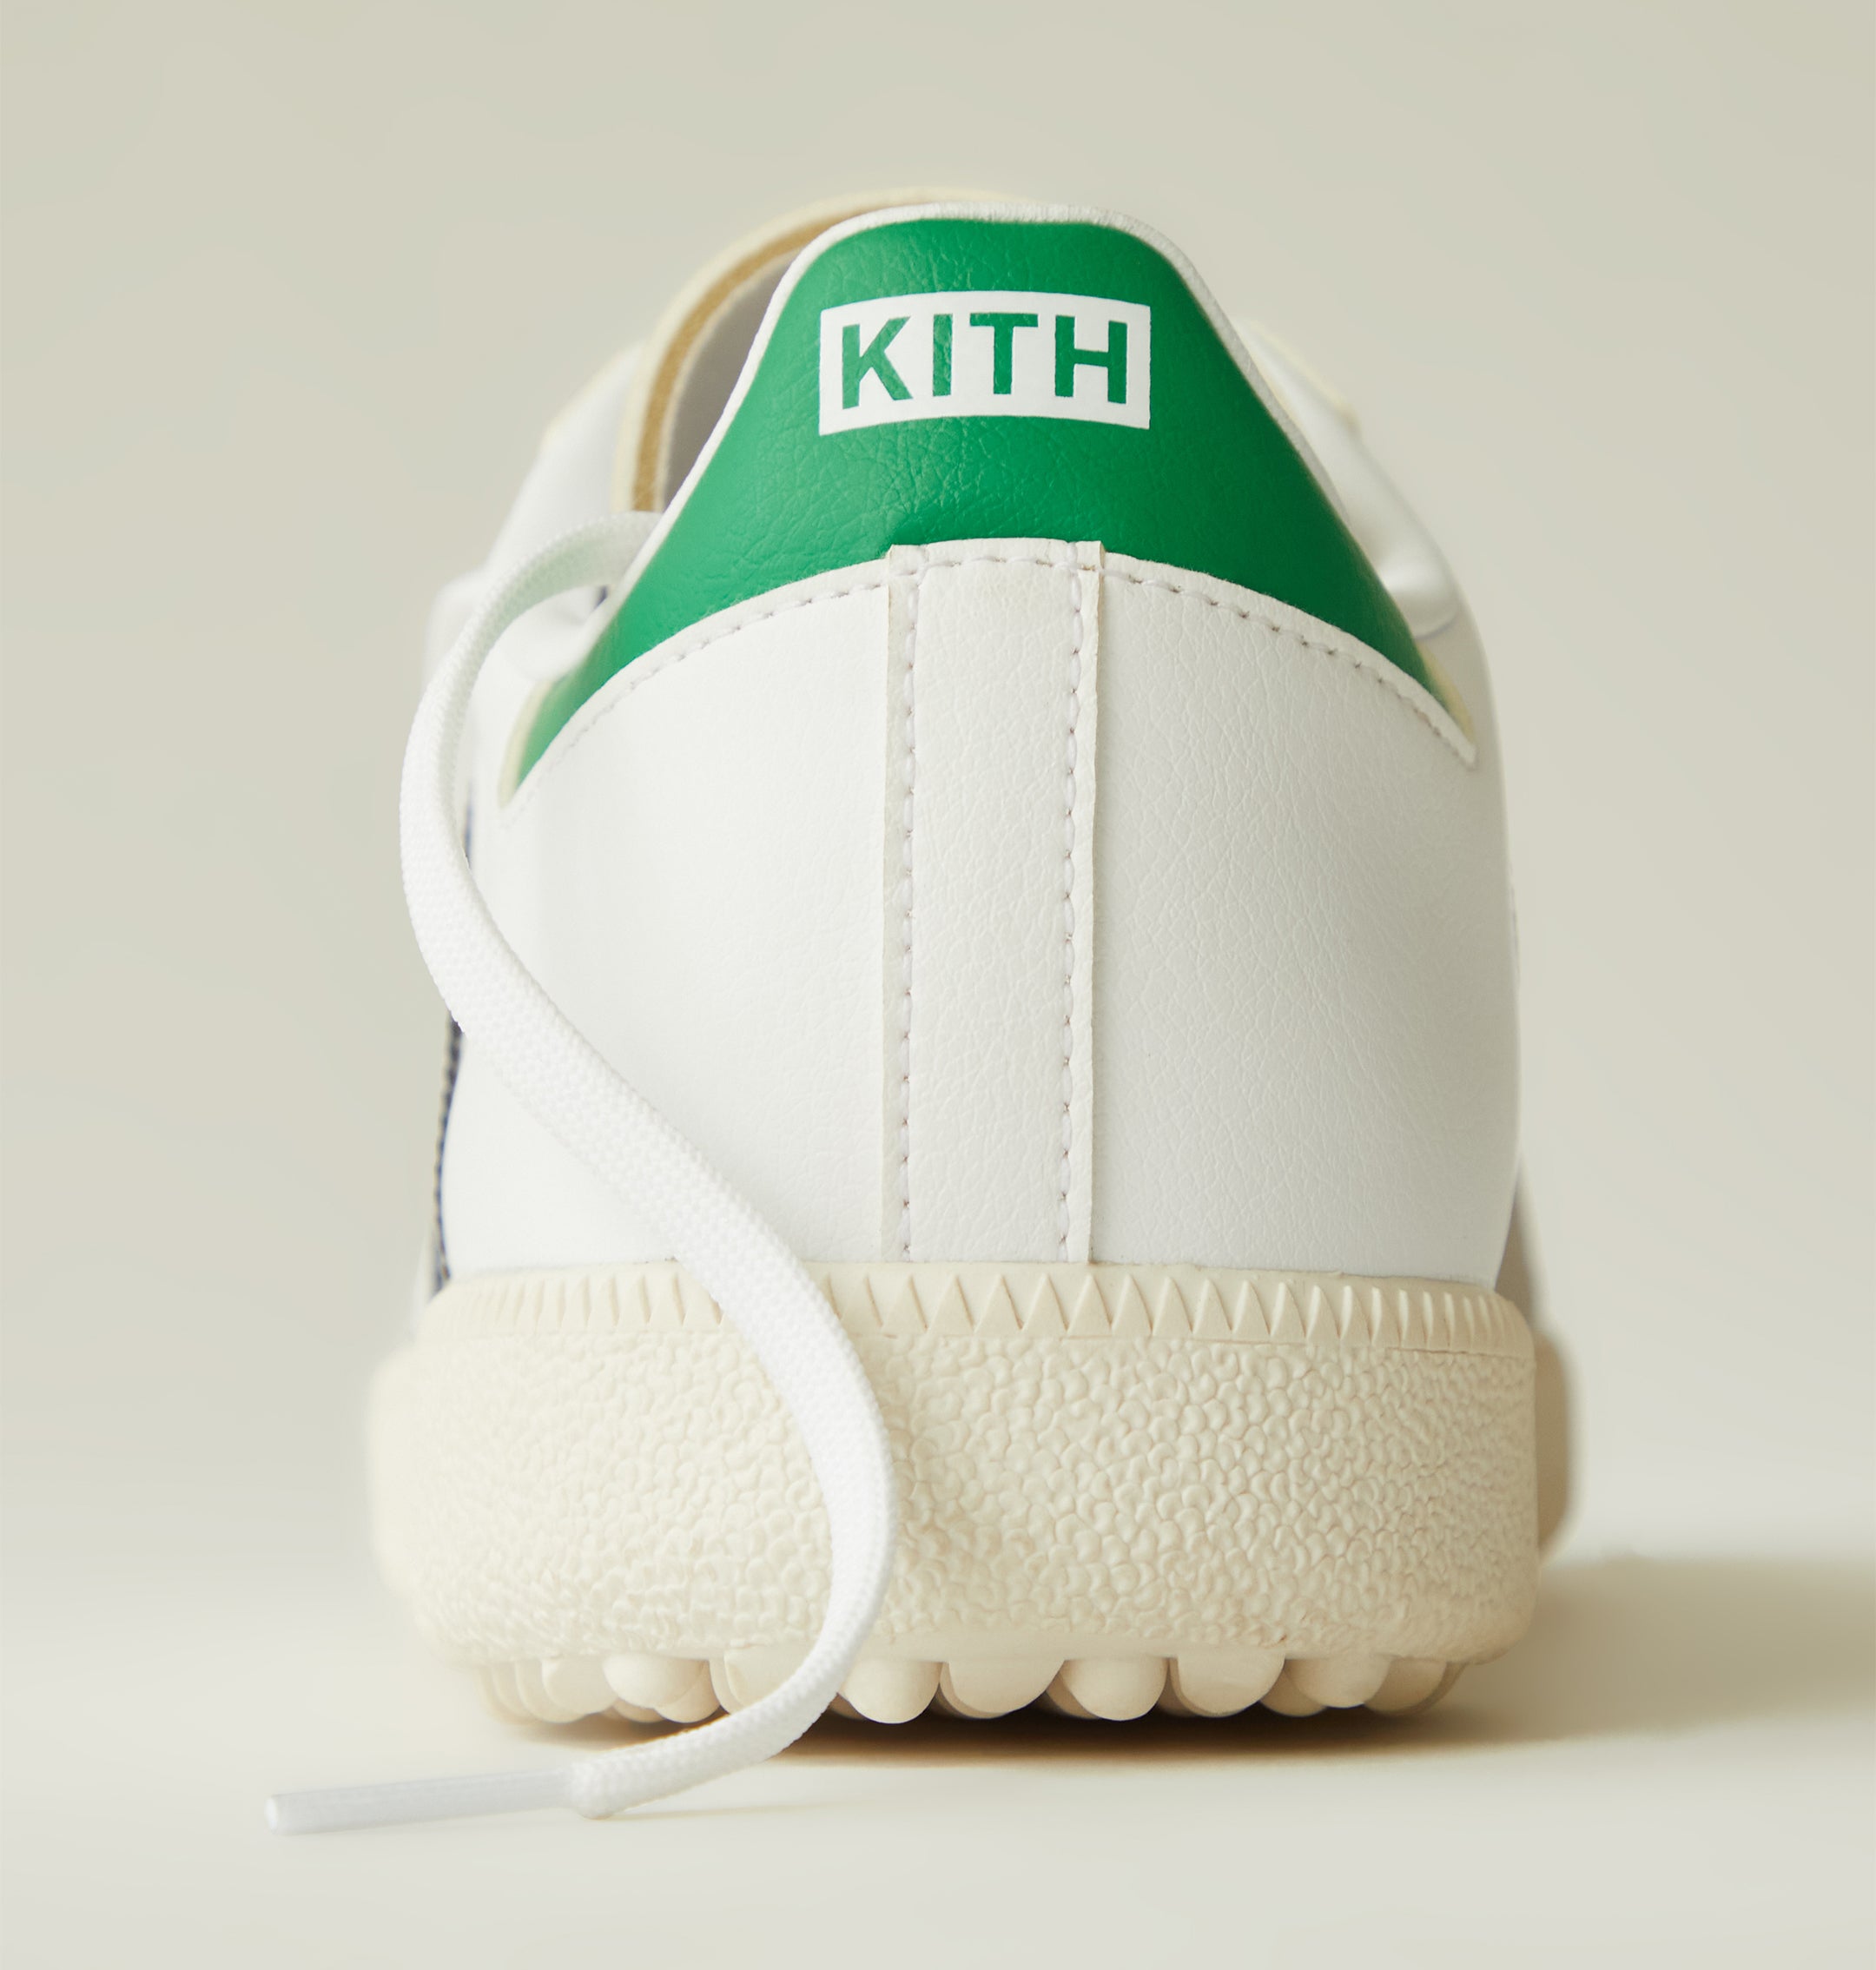 Kith x Adidas Samba Golf Shoe White Green Release Date Pair Heel Detail